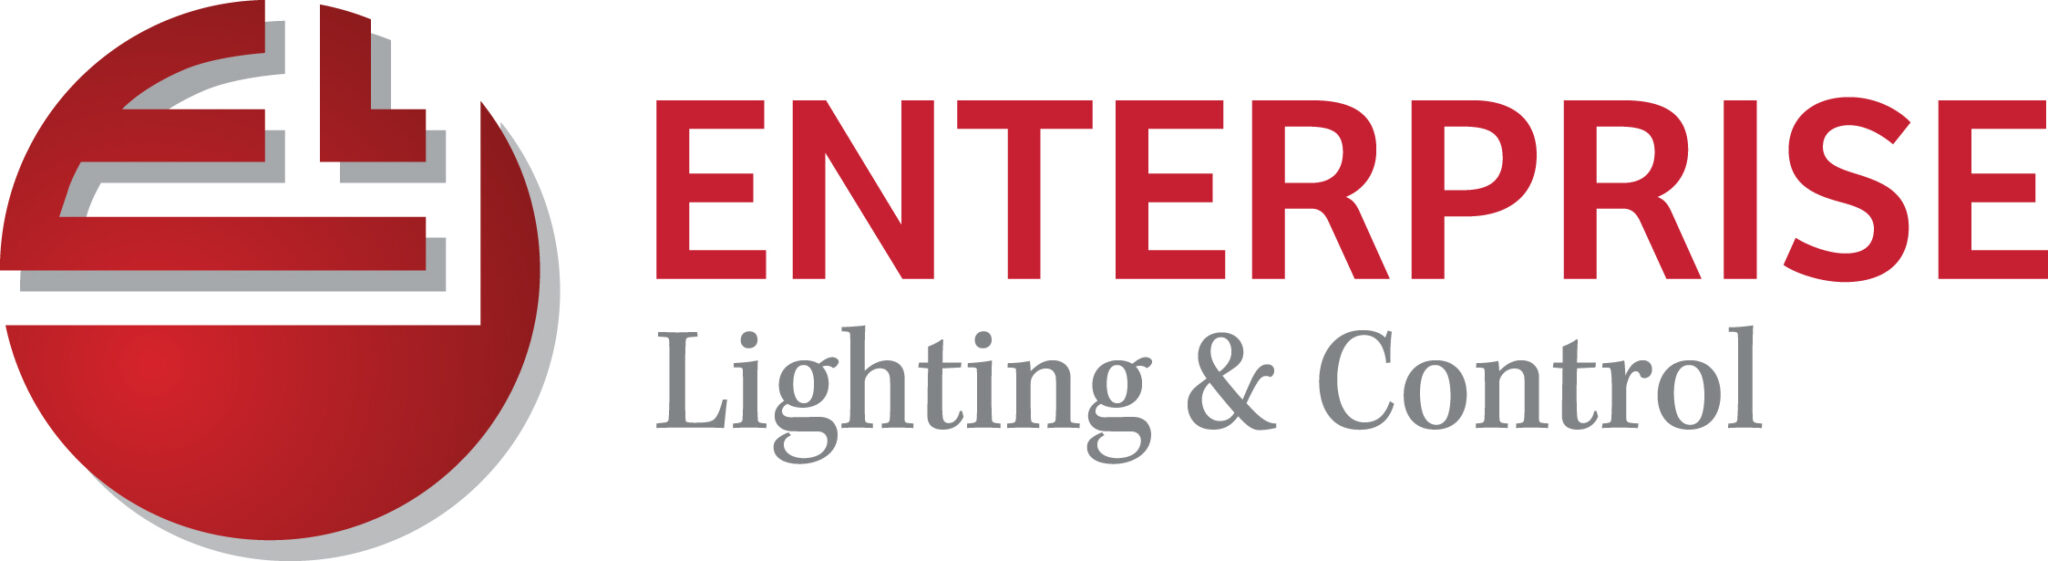 EnterpriseLighting-logo